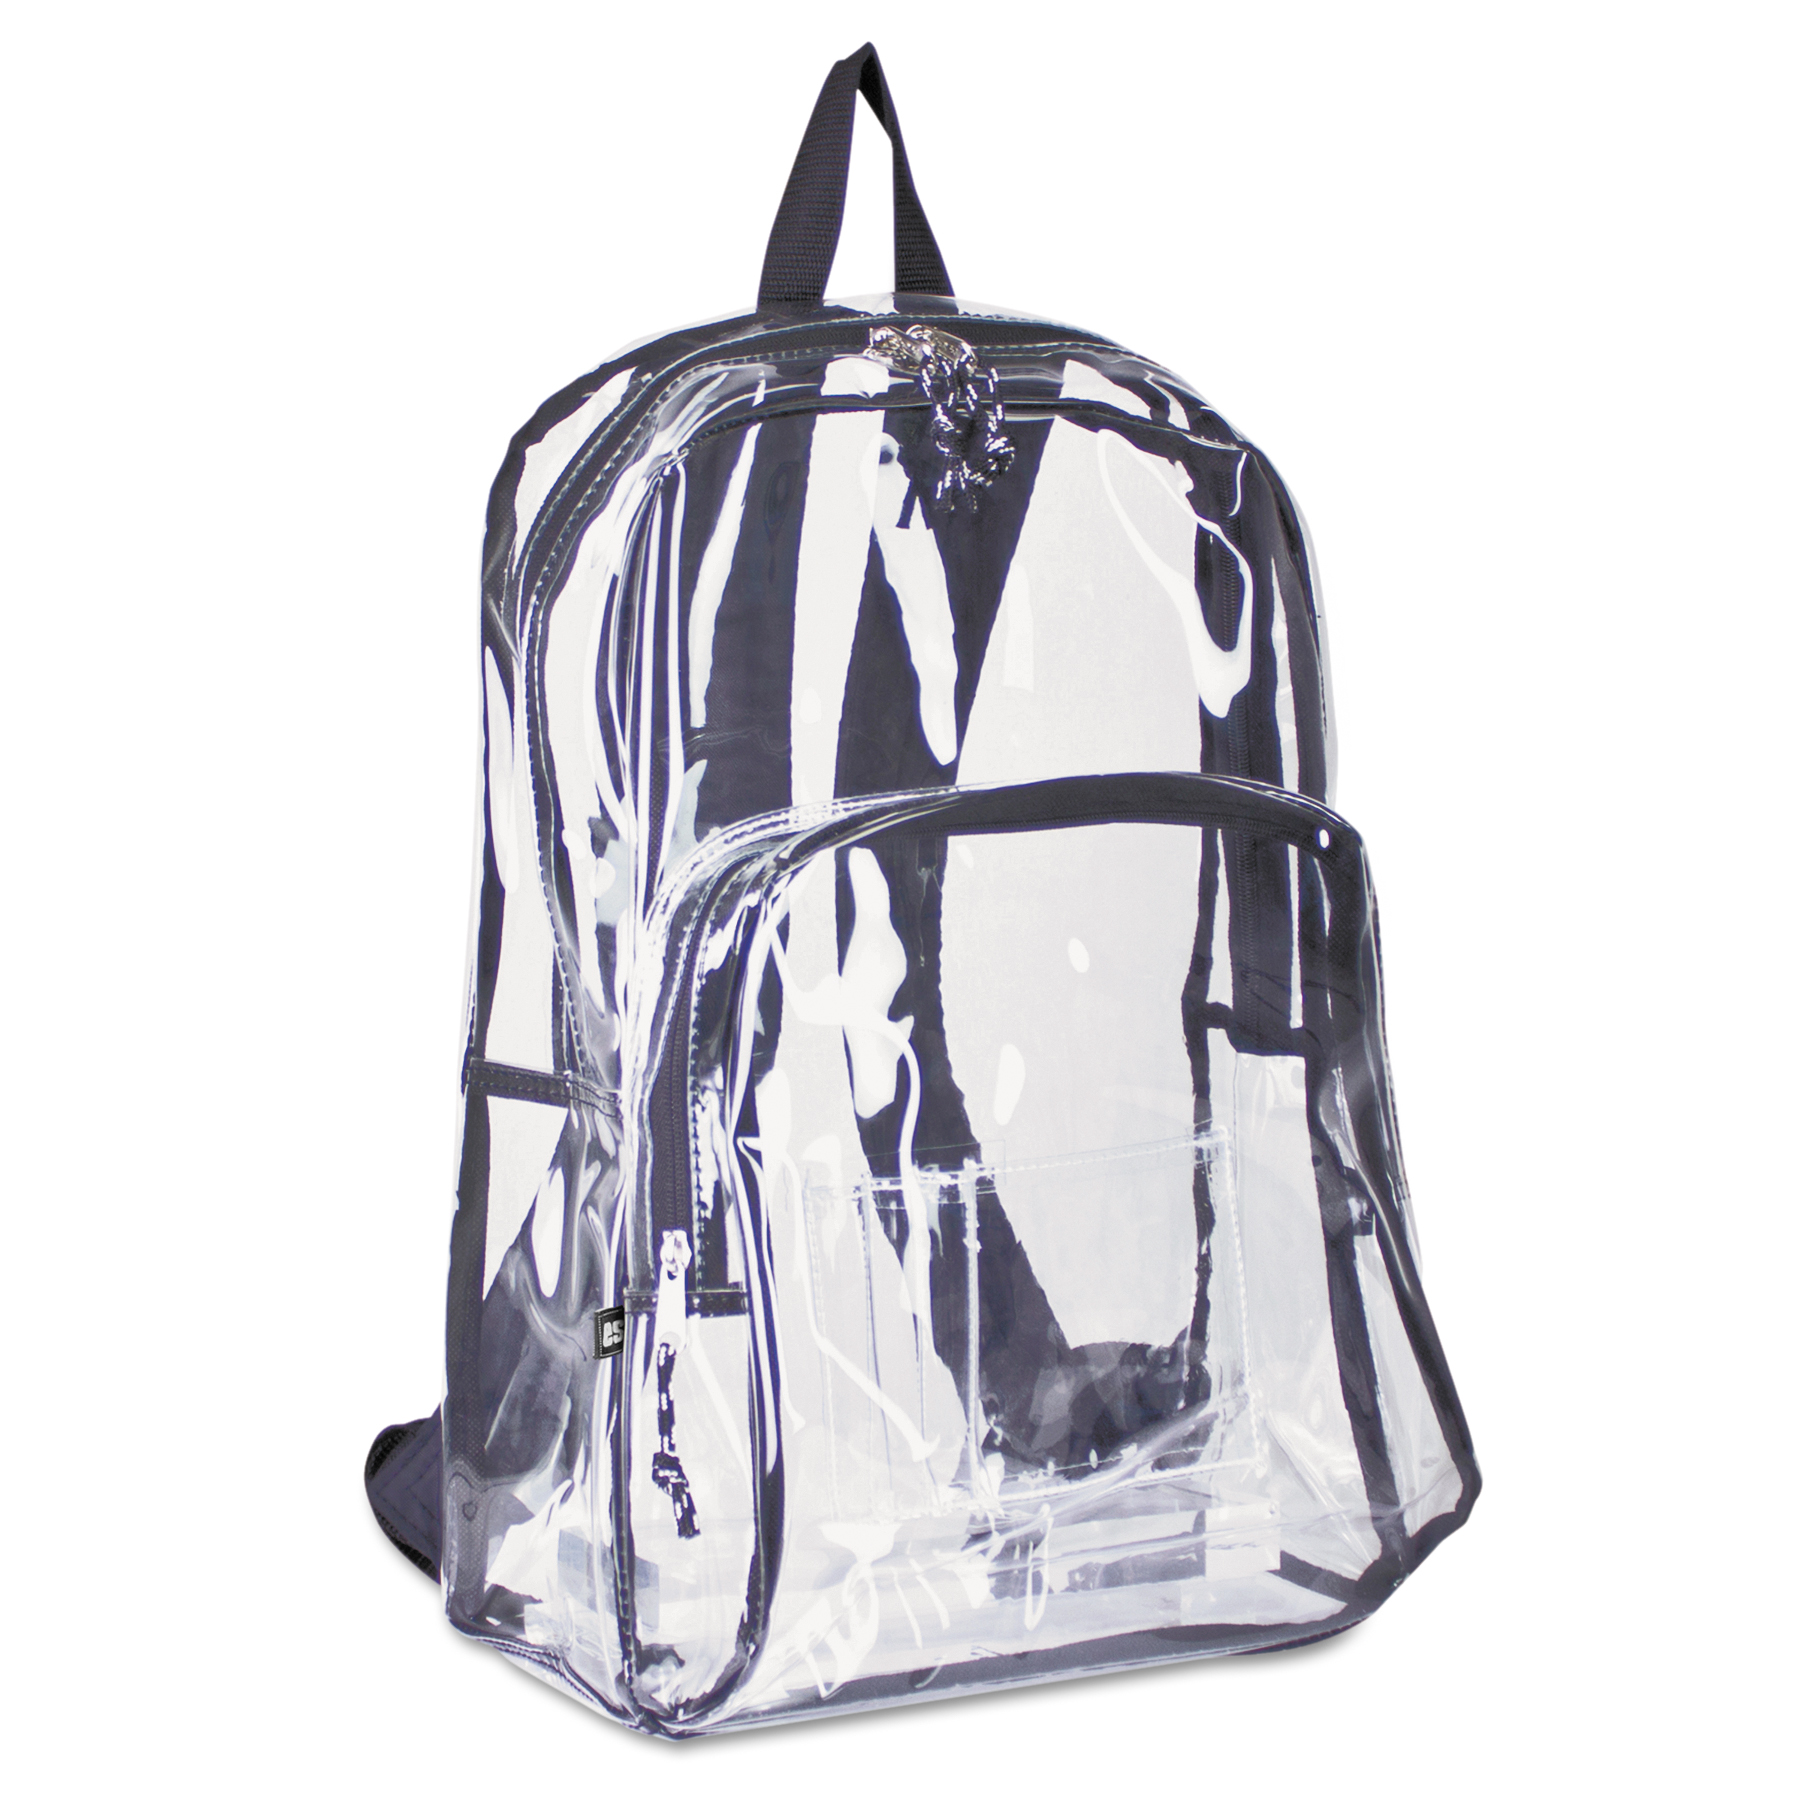 Eastport Backpack  Pvc Plastic  12 1/2 X 17 1/2 X 5 1/2  Clear